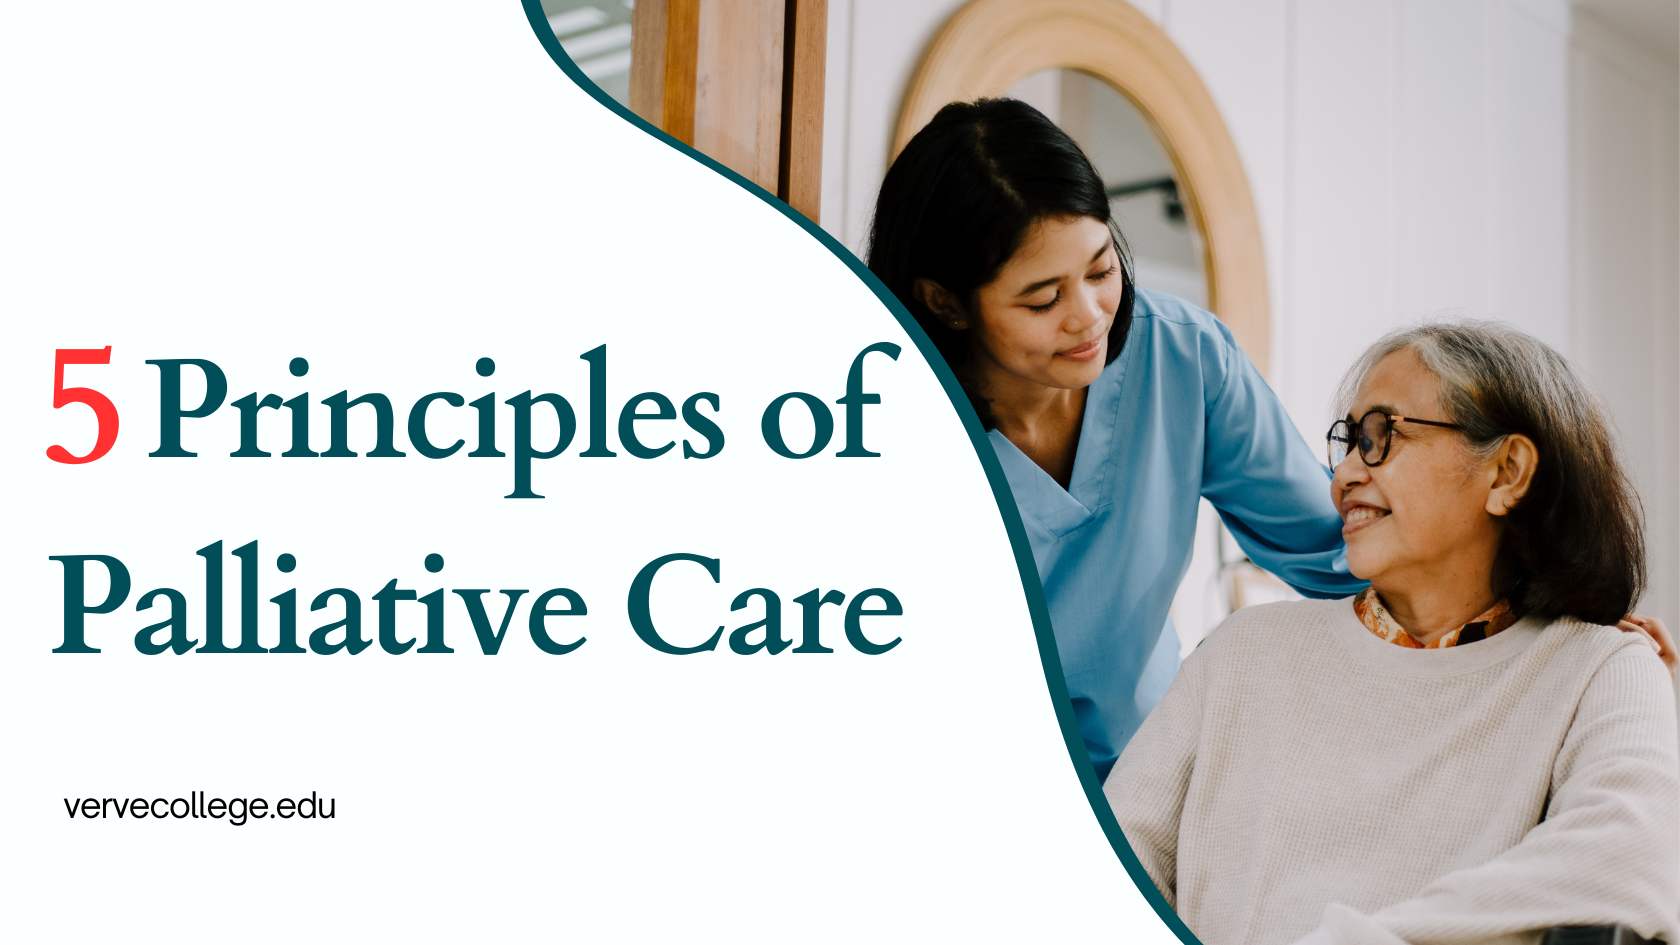 5 Principles of Palliative Care